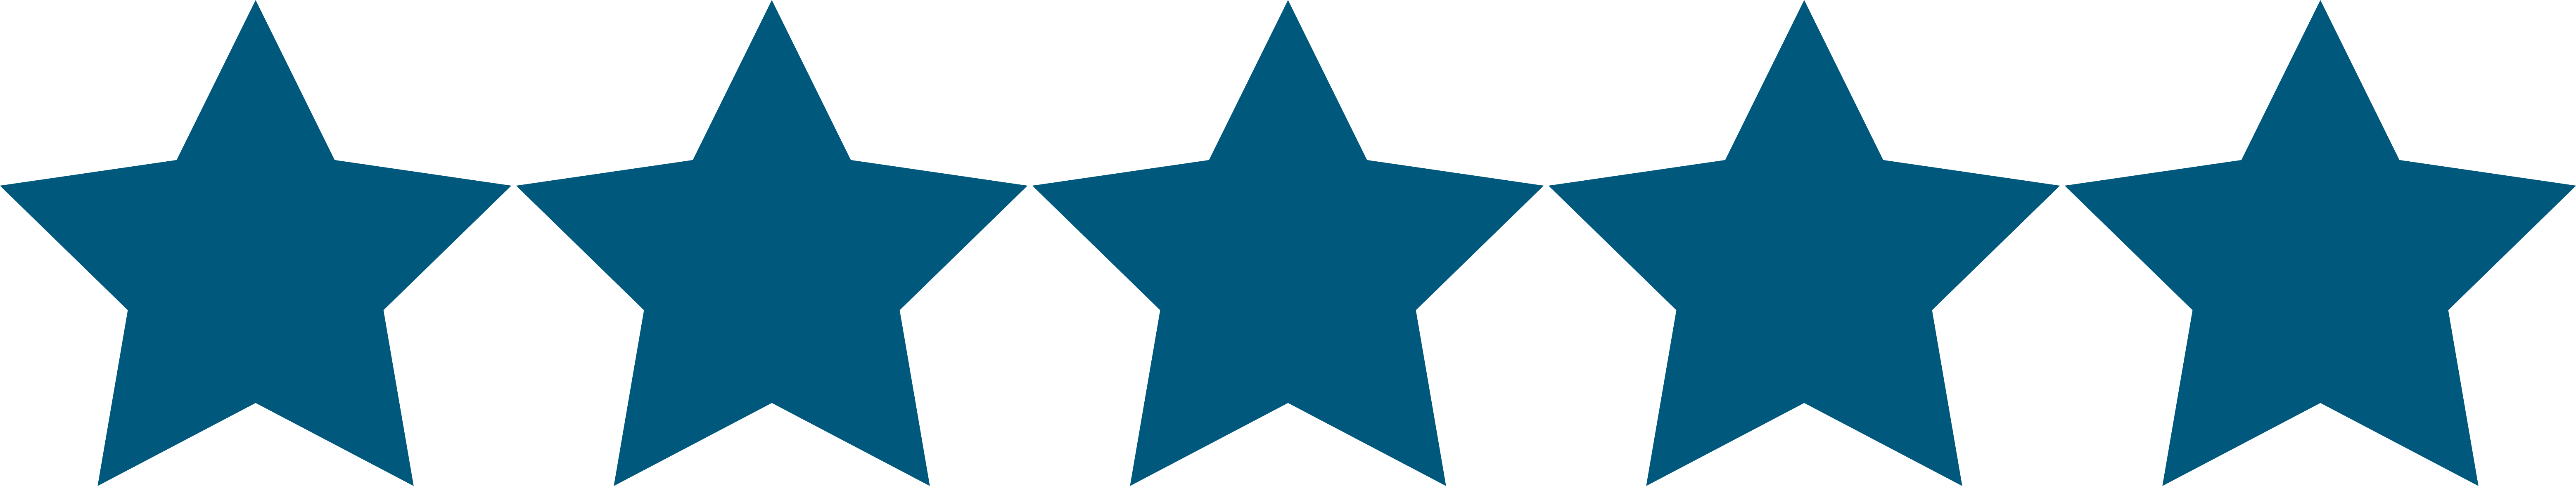 Image of 5 blue stars